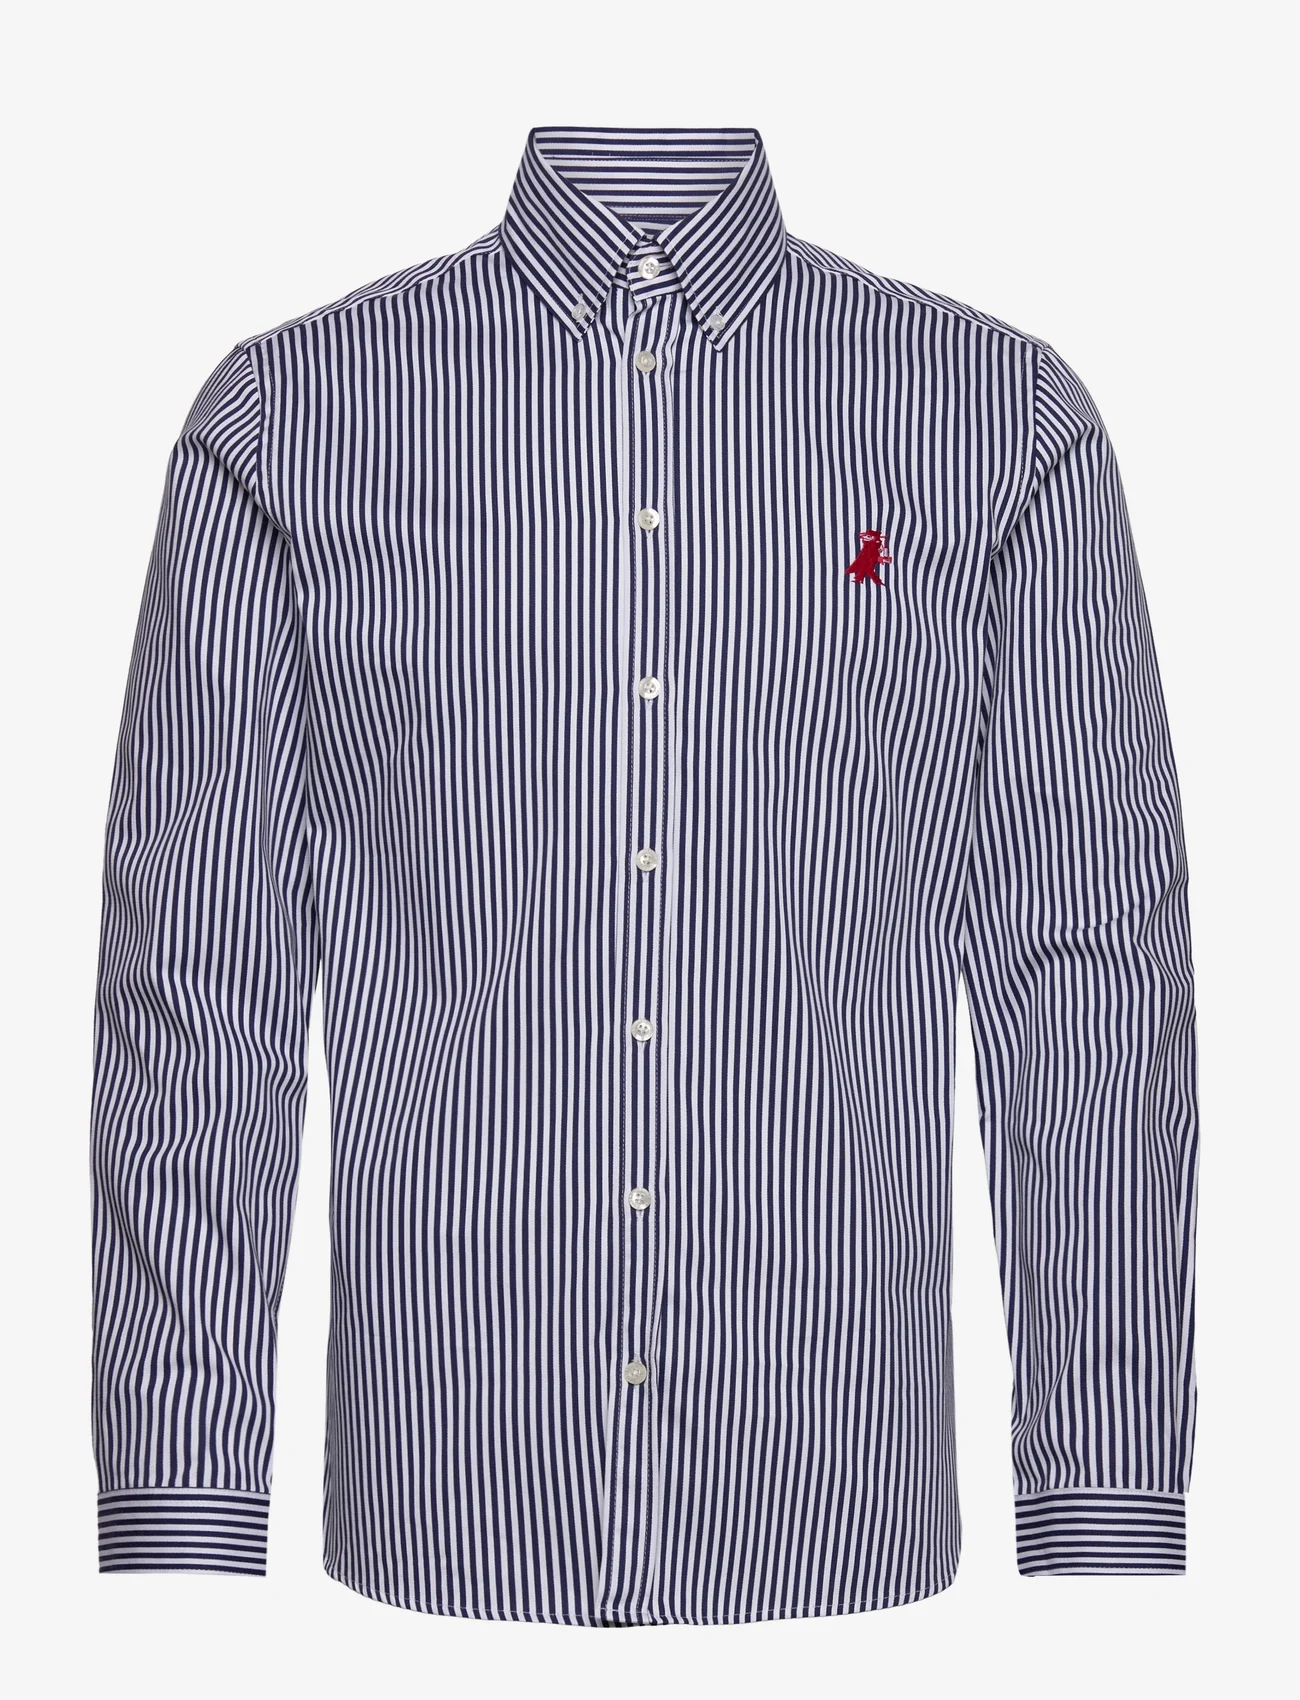 Libertine-Libertine - Voleur Shirt - muodolliset kauluspaidat - white & navy stripe - 0